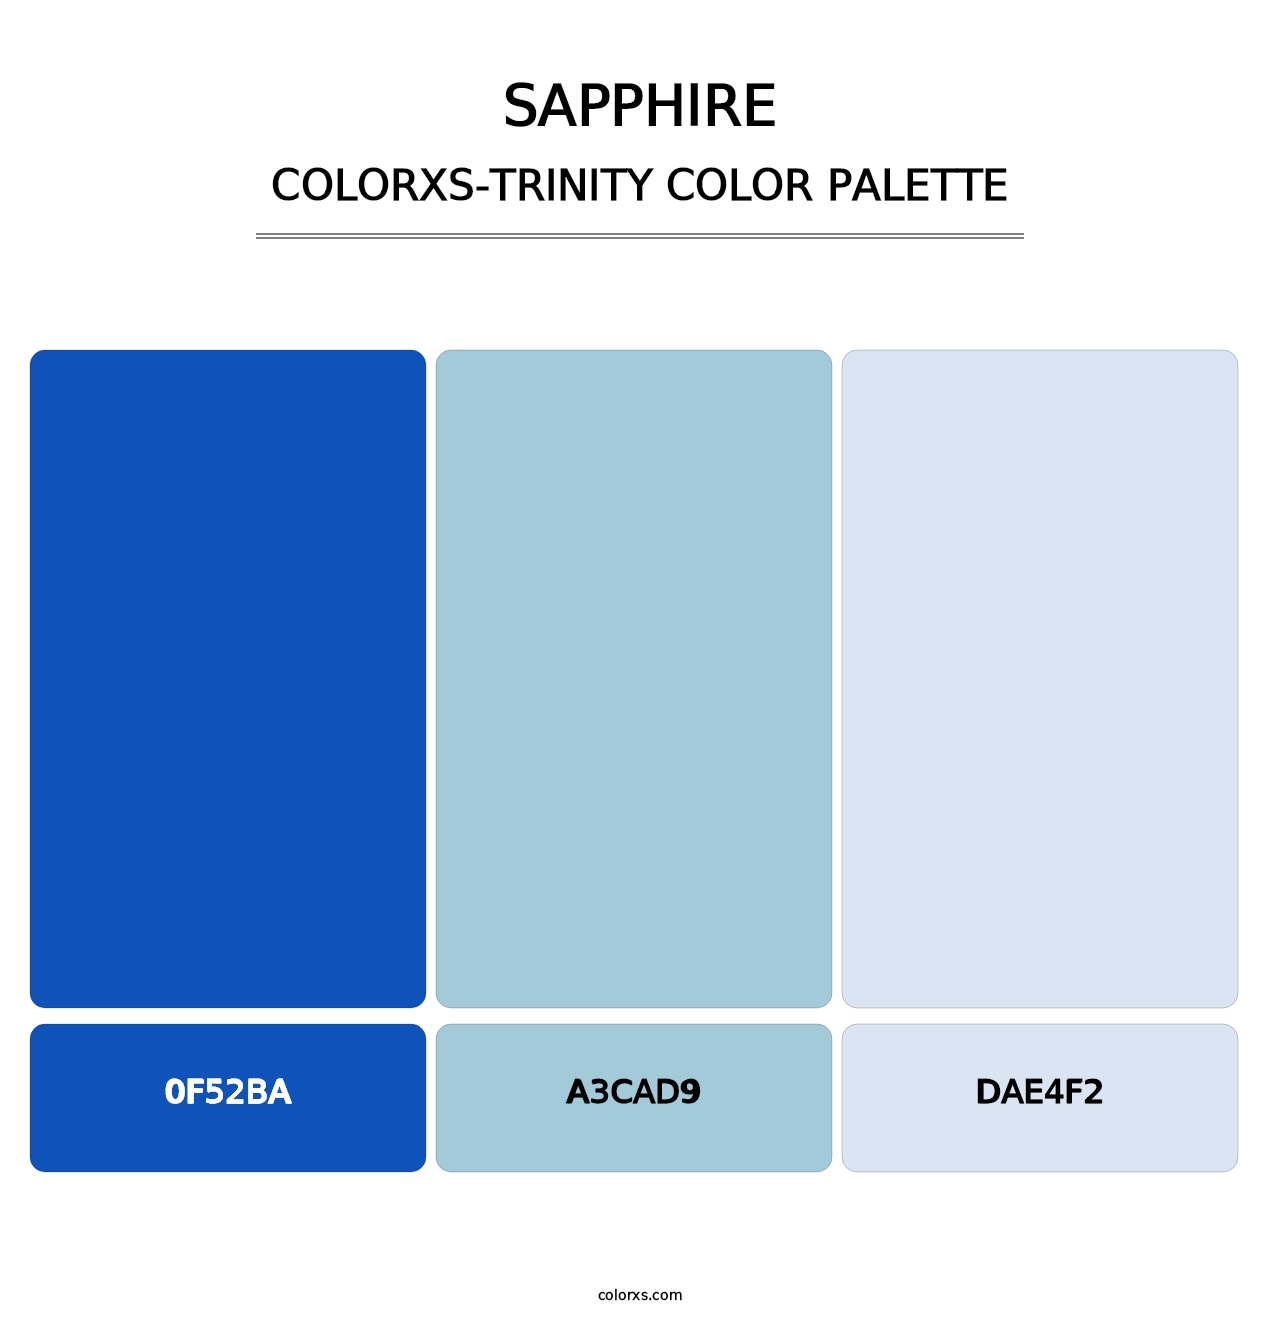 Sapphire - Colorxs Trinity Palette